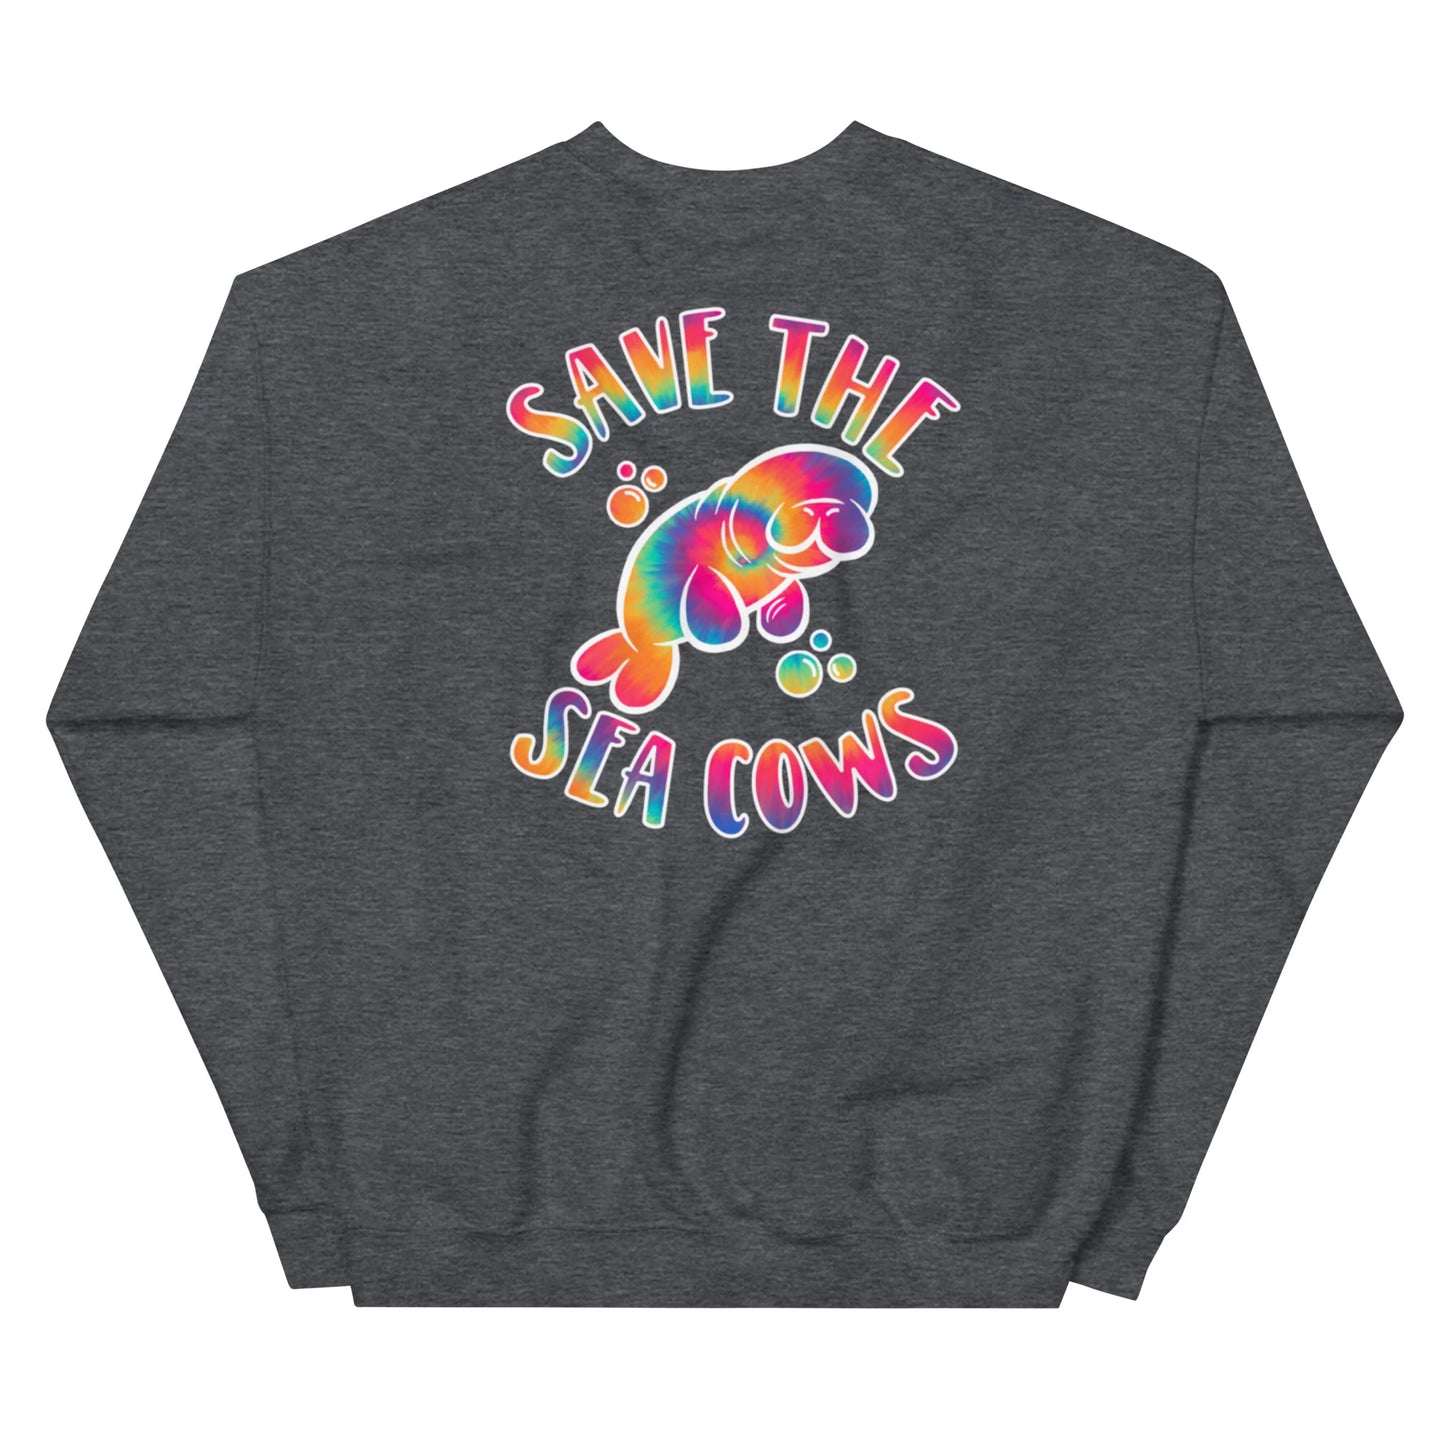 "Trippy Tie-Dye" Save the Sea Cows Sweatshirt